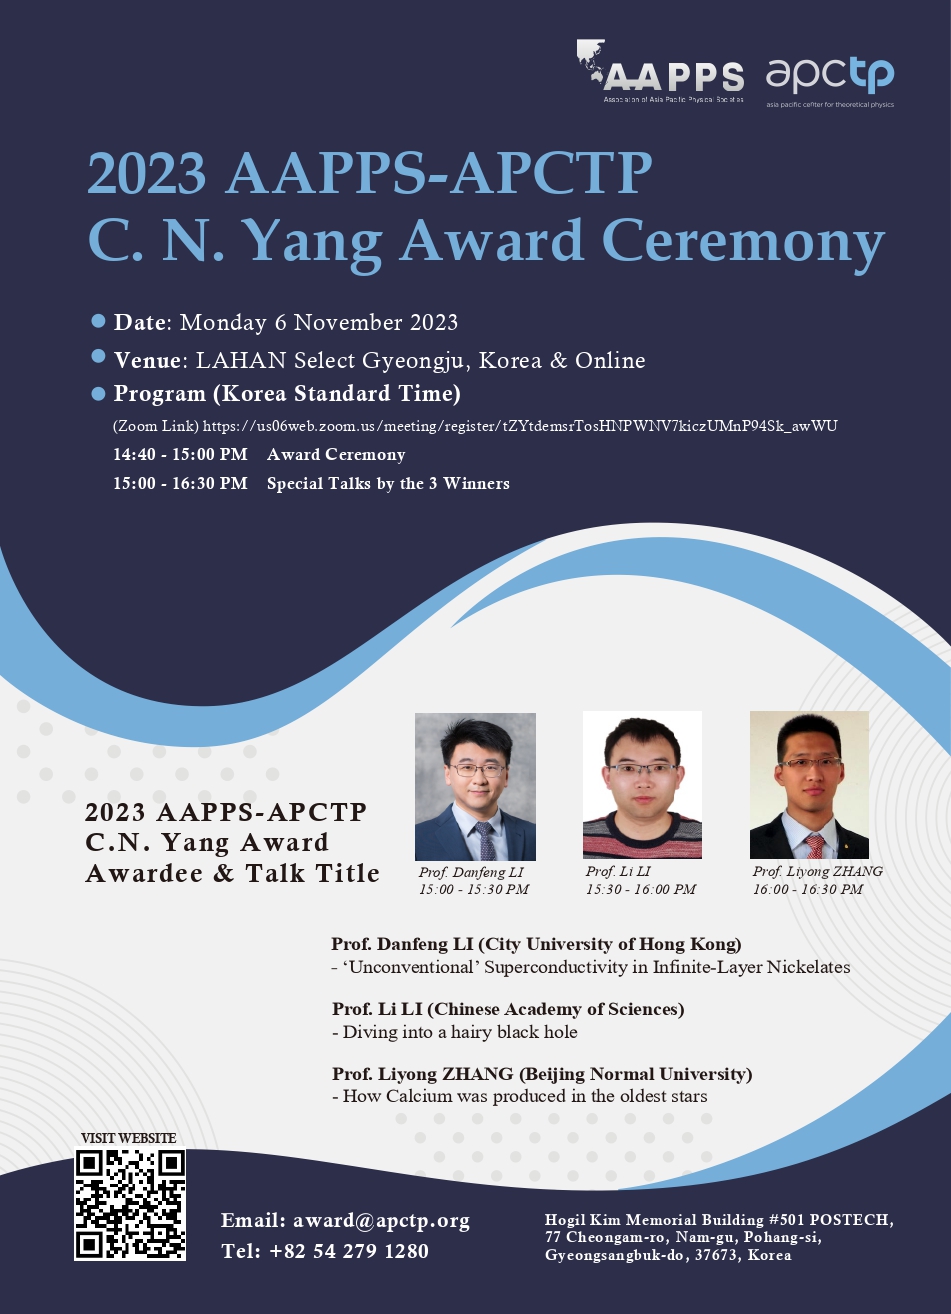 2023 C.N. Yang Award Ceremony

- Date: Monday 6 November 2023
- Venue: LAHAN Select Gyeongju, Korea & Online
- Program (Korea Standard Time)
  (Zoom Link) https://us06web.zoom.us/meeting/register/tZYtdemsrTosHNPWNV7kiczUMnP94Sk_awWU
  14:40 - 15:00 PM Award Ceremony
  15:00 - 16:30 PM Special Talks by the 3 Winners